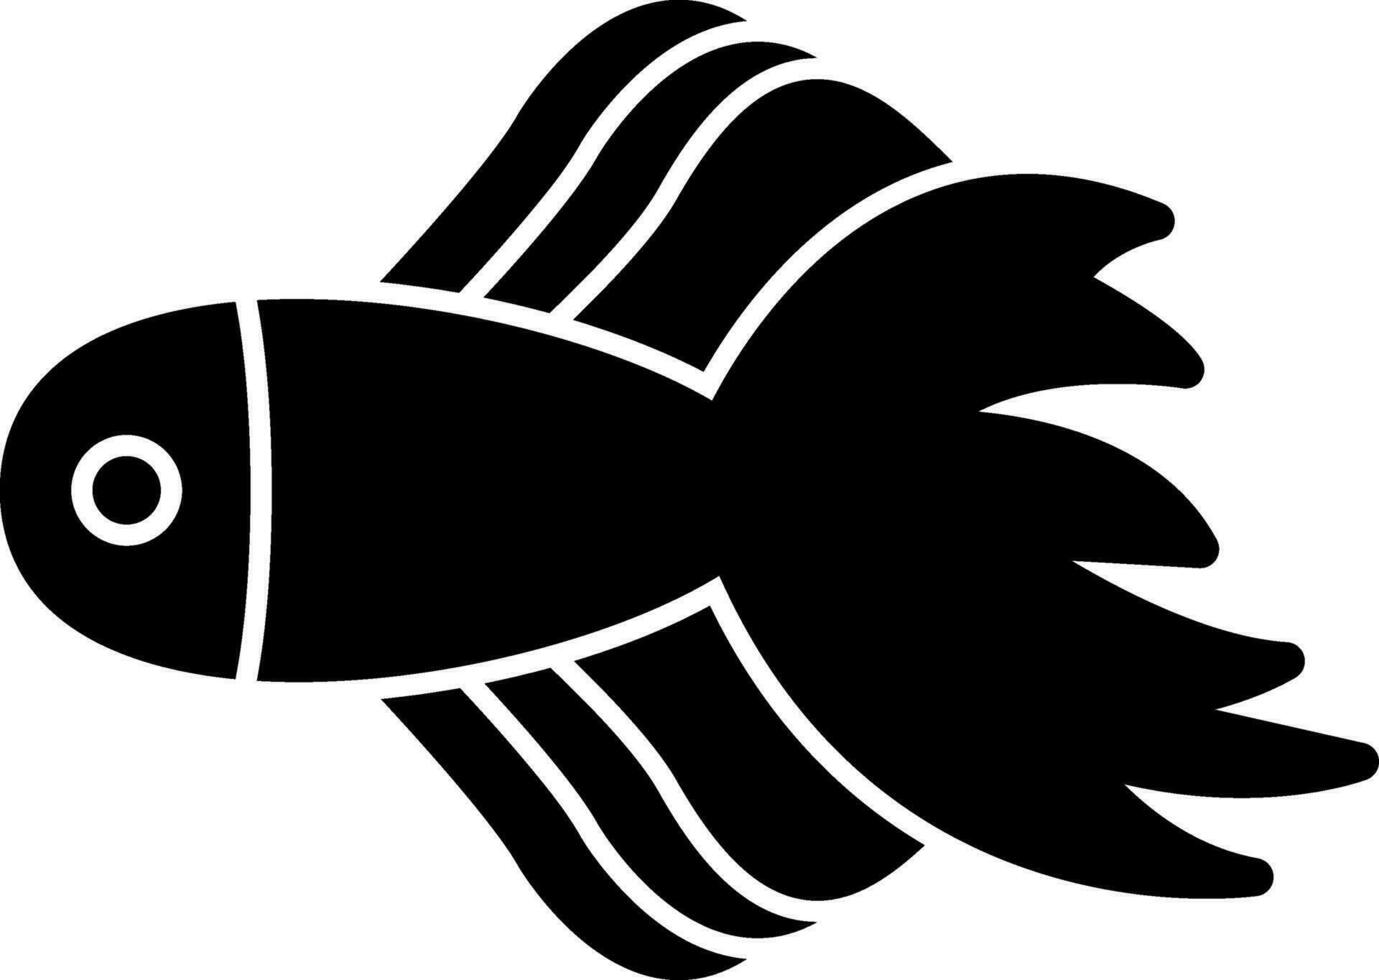 betta poisson vecteur icône conception